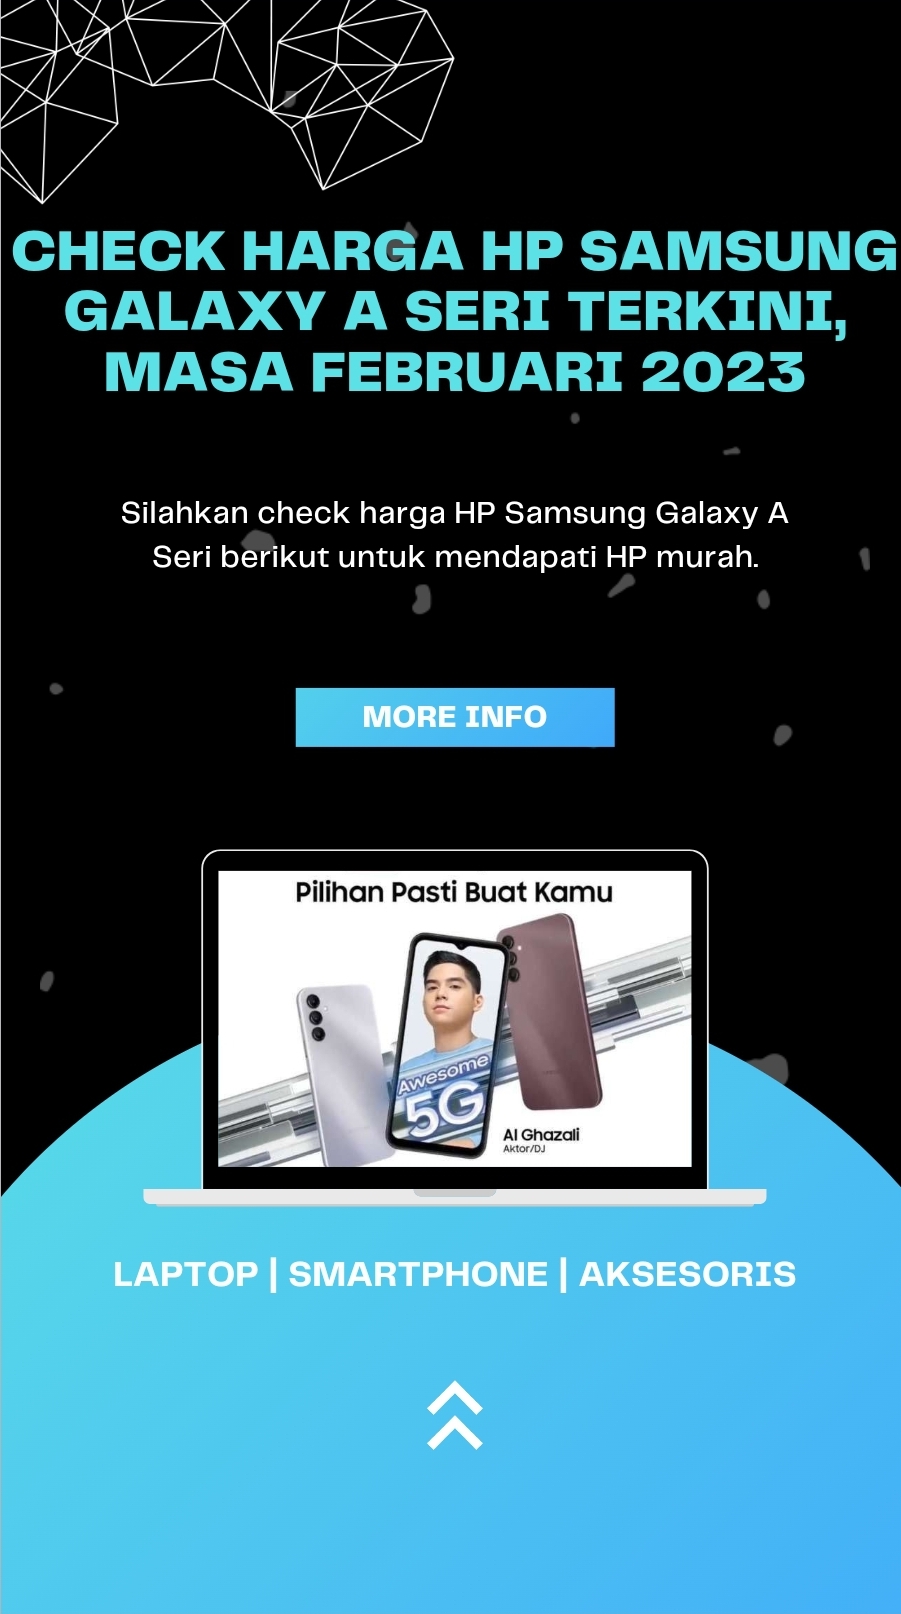 Check Harga HP Samsung Galaxy A Seri Terkini, Masa Februari 2023